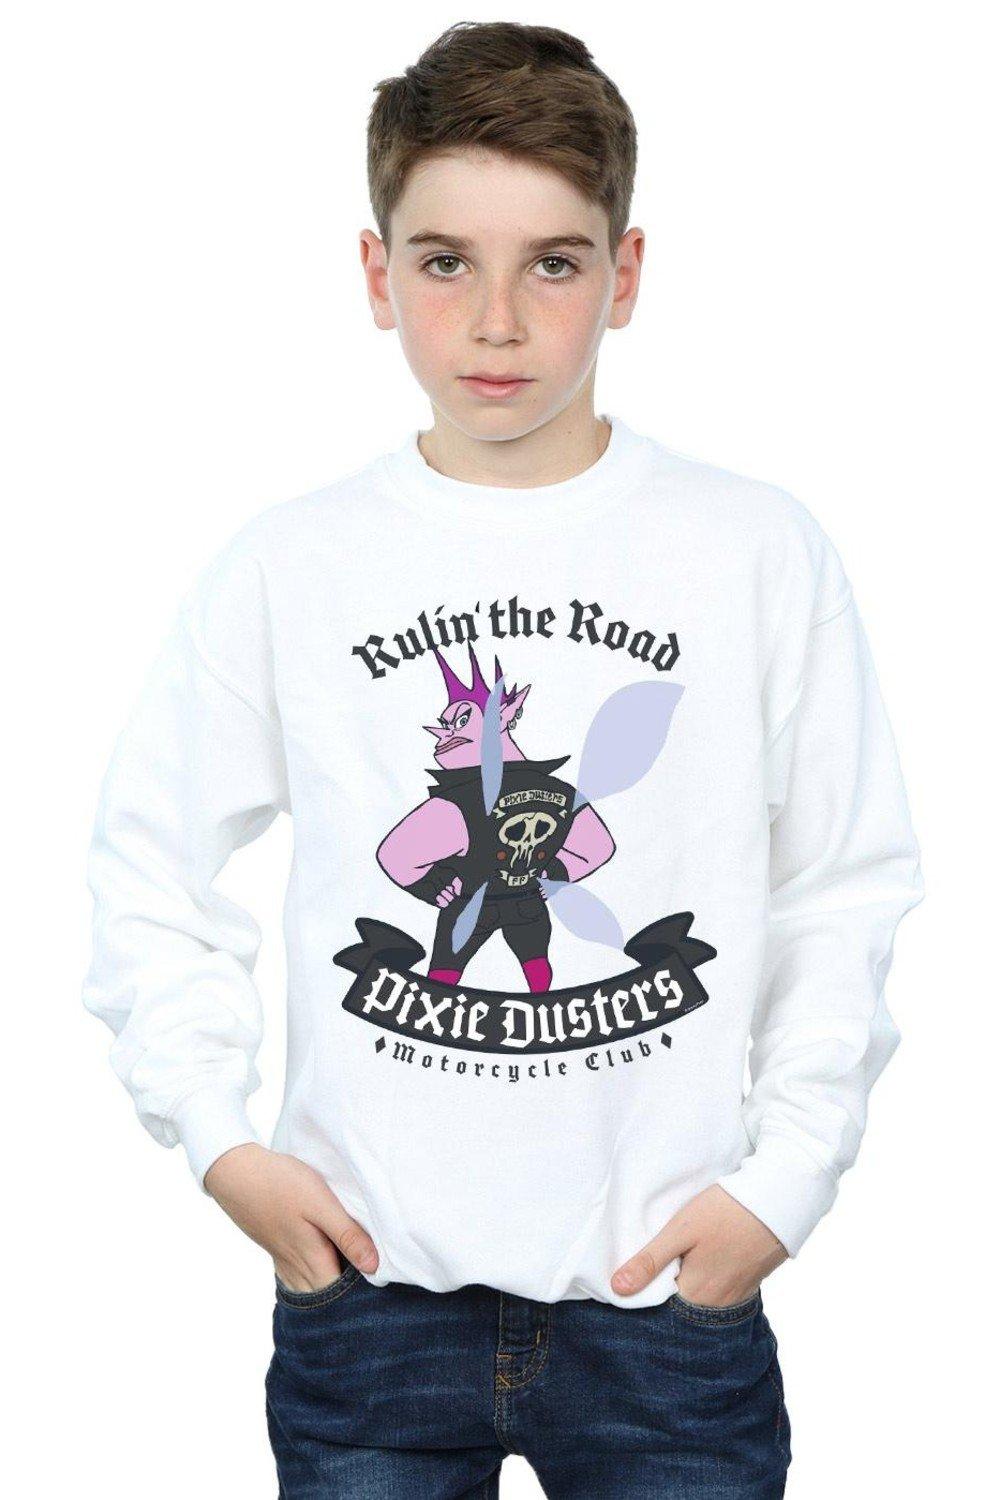 Onward Pixie Dusters Rulin’ Sweatshirt